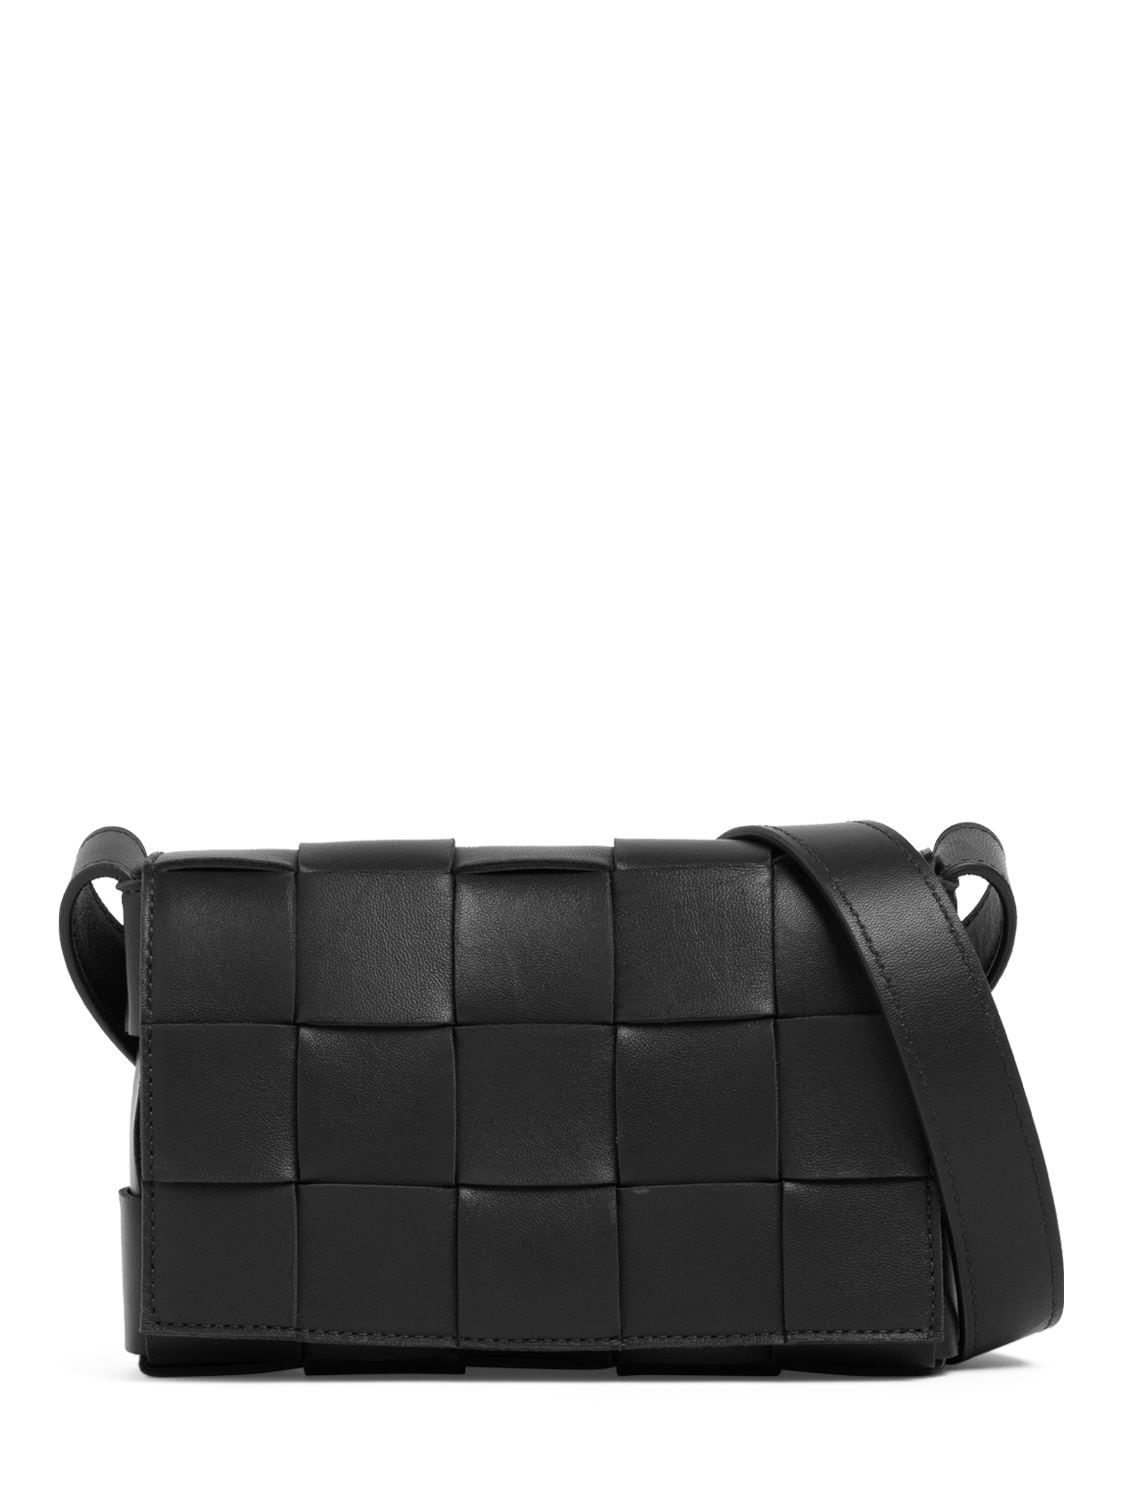 Bottega Veneta Micro Cassette Leather Shoulder Bag In Black